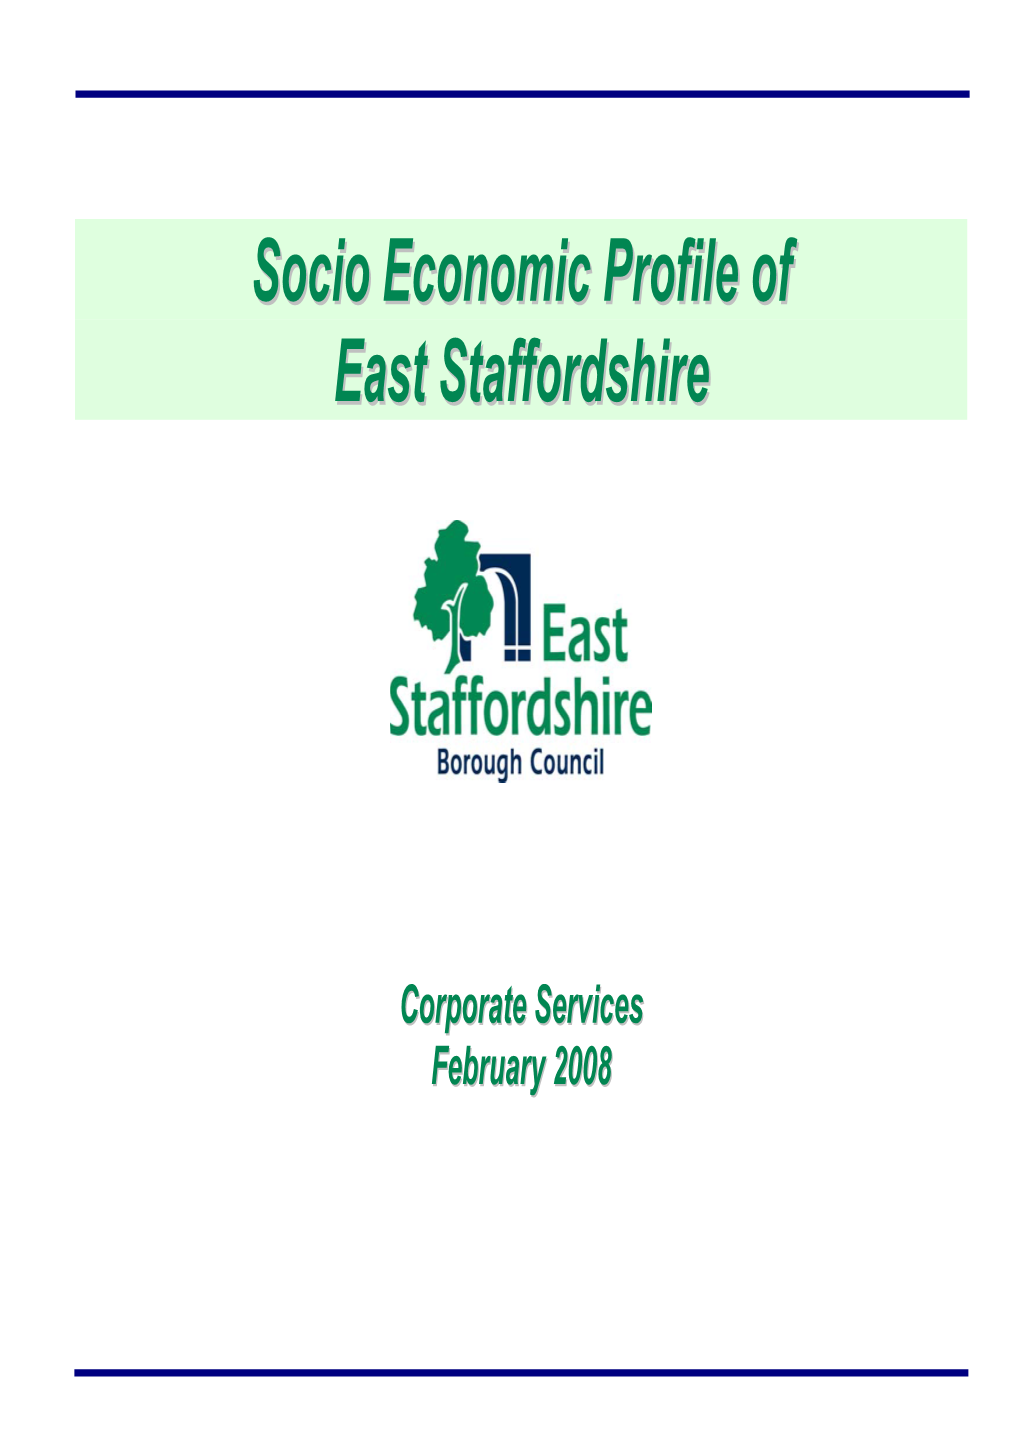 Socio Economic Profile of East Staffordshire– February 2008